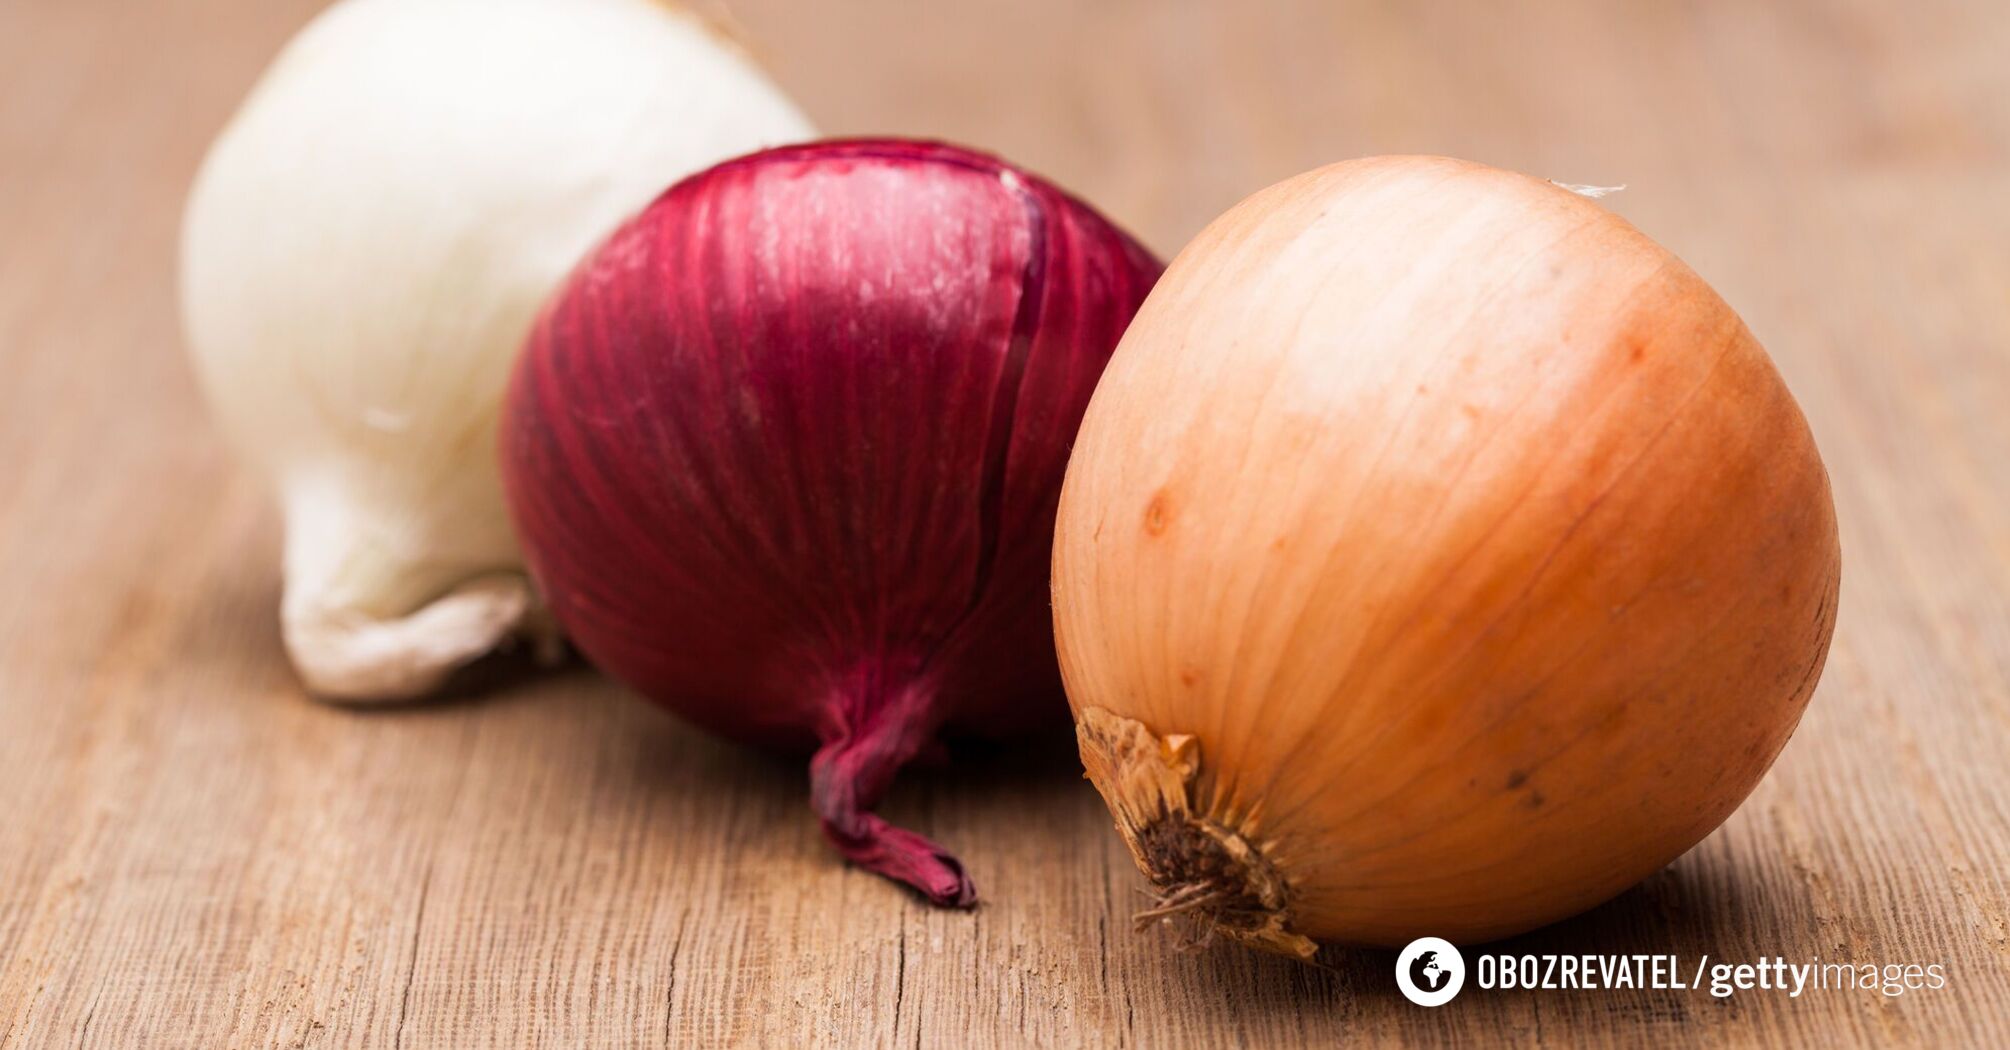 Onions help improve blood circulation